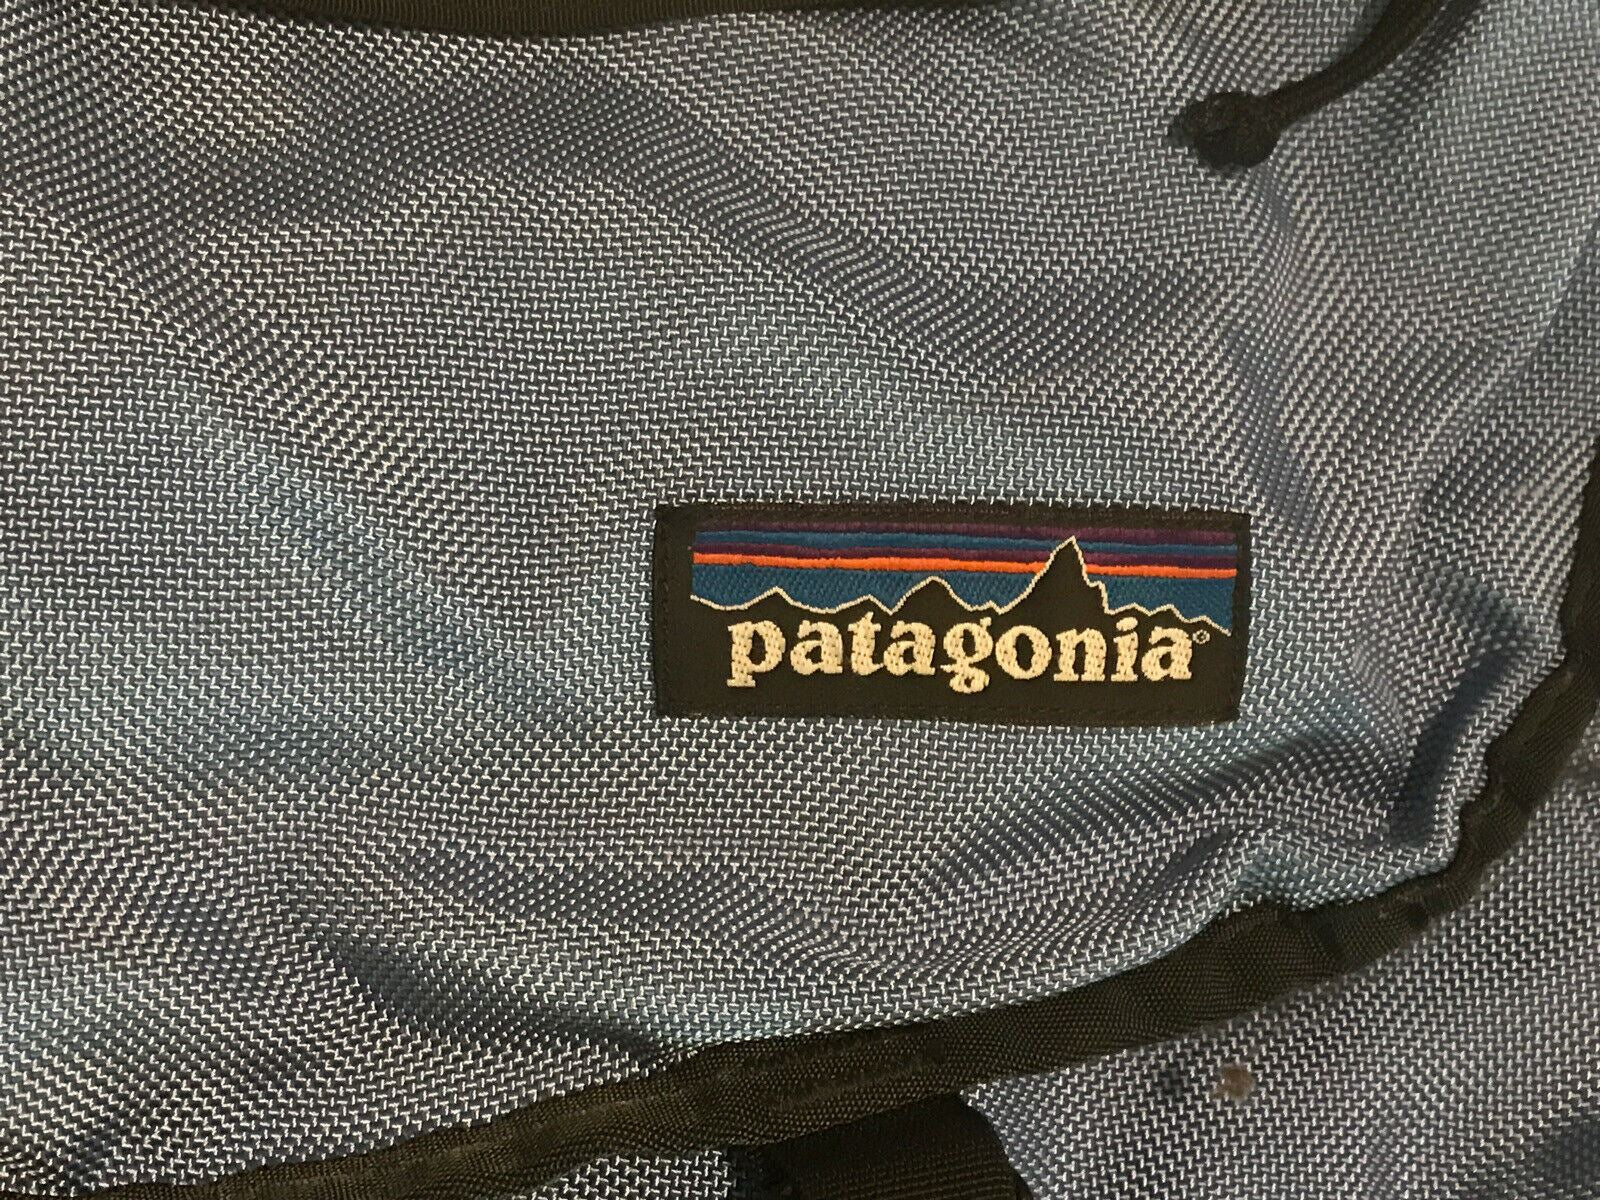 PATAGONIA Critical Mass Large Messenger/Laptop Bag - Midnight Blue 